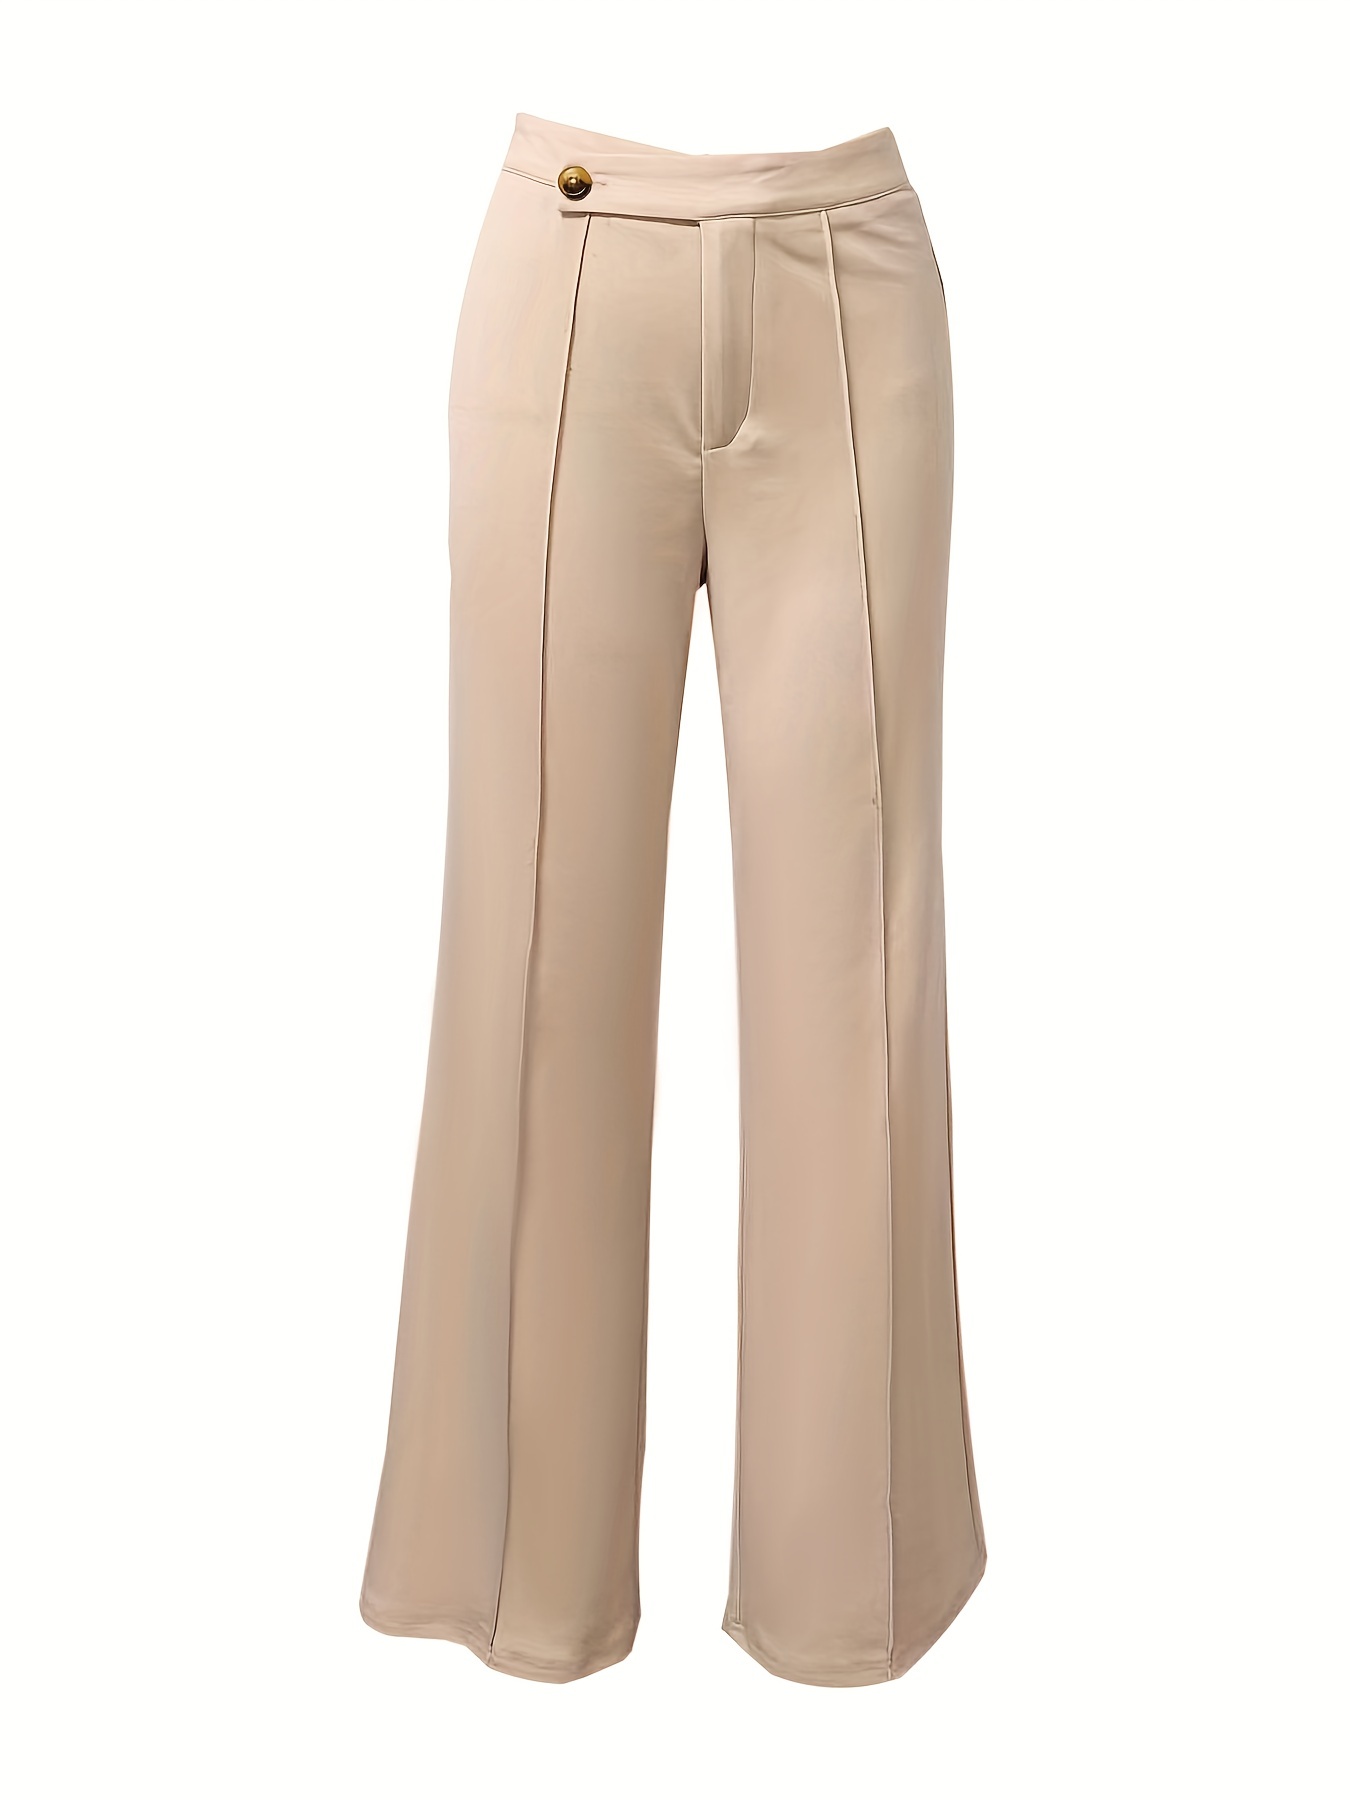 Solid Button Front Pintuck Pants, Casual High Waist Pants, Women's